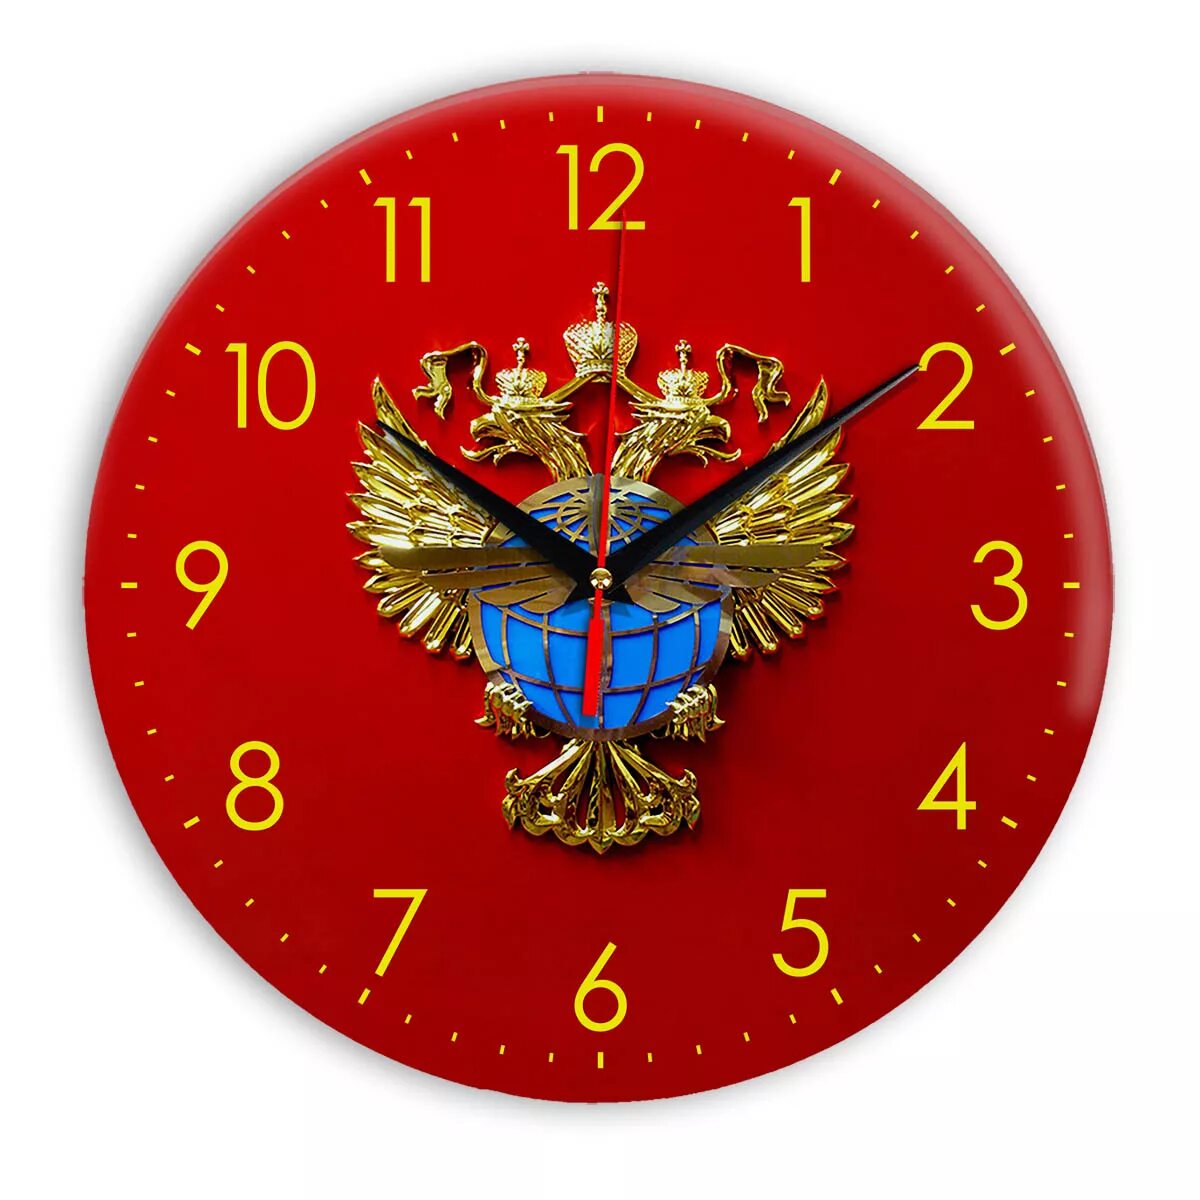 Часы настенные россия. Настенные часы Россия. Часы с символикой. Часы настенные с символикой. Настенные часы с Российской символикой.